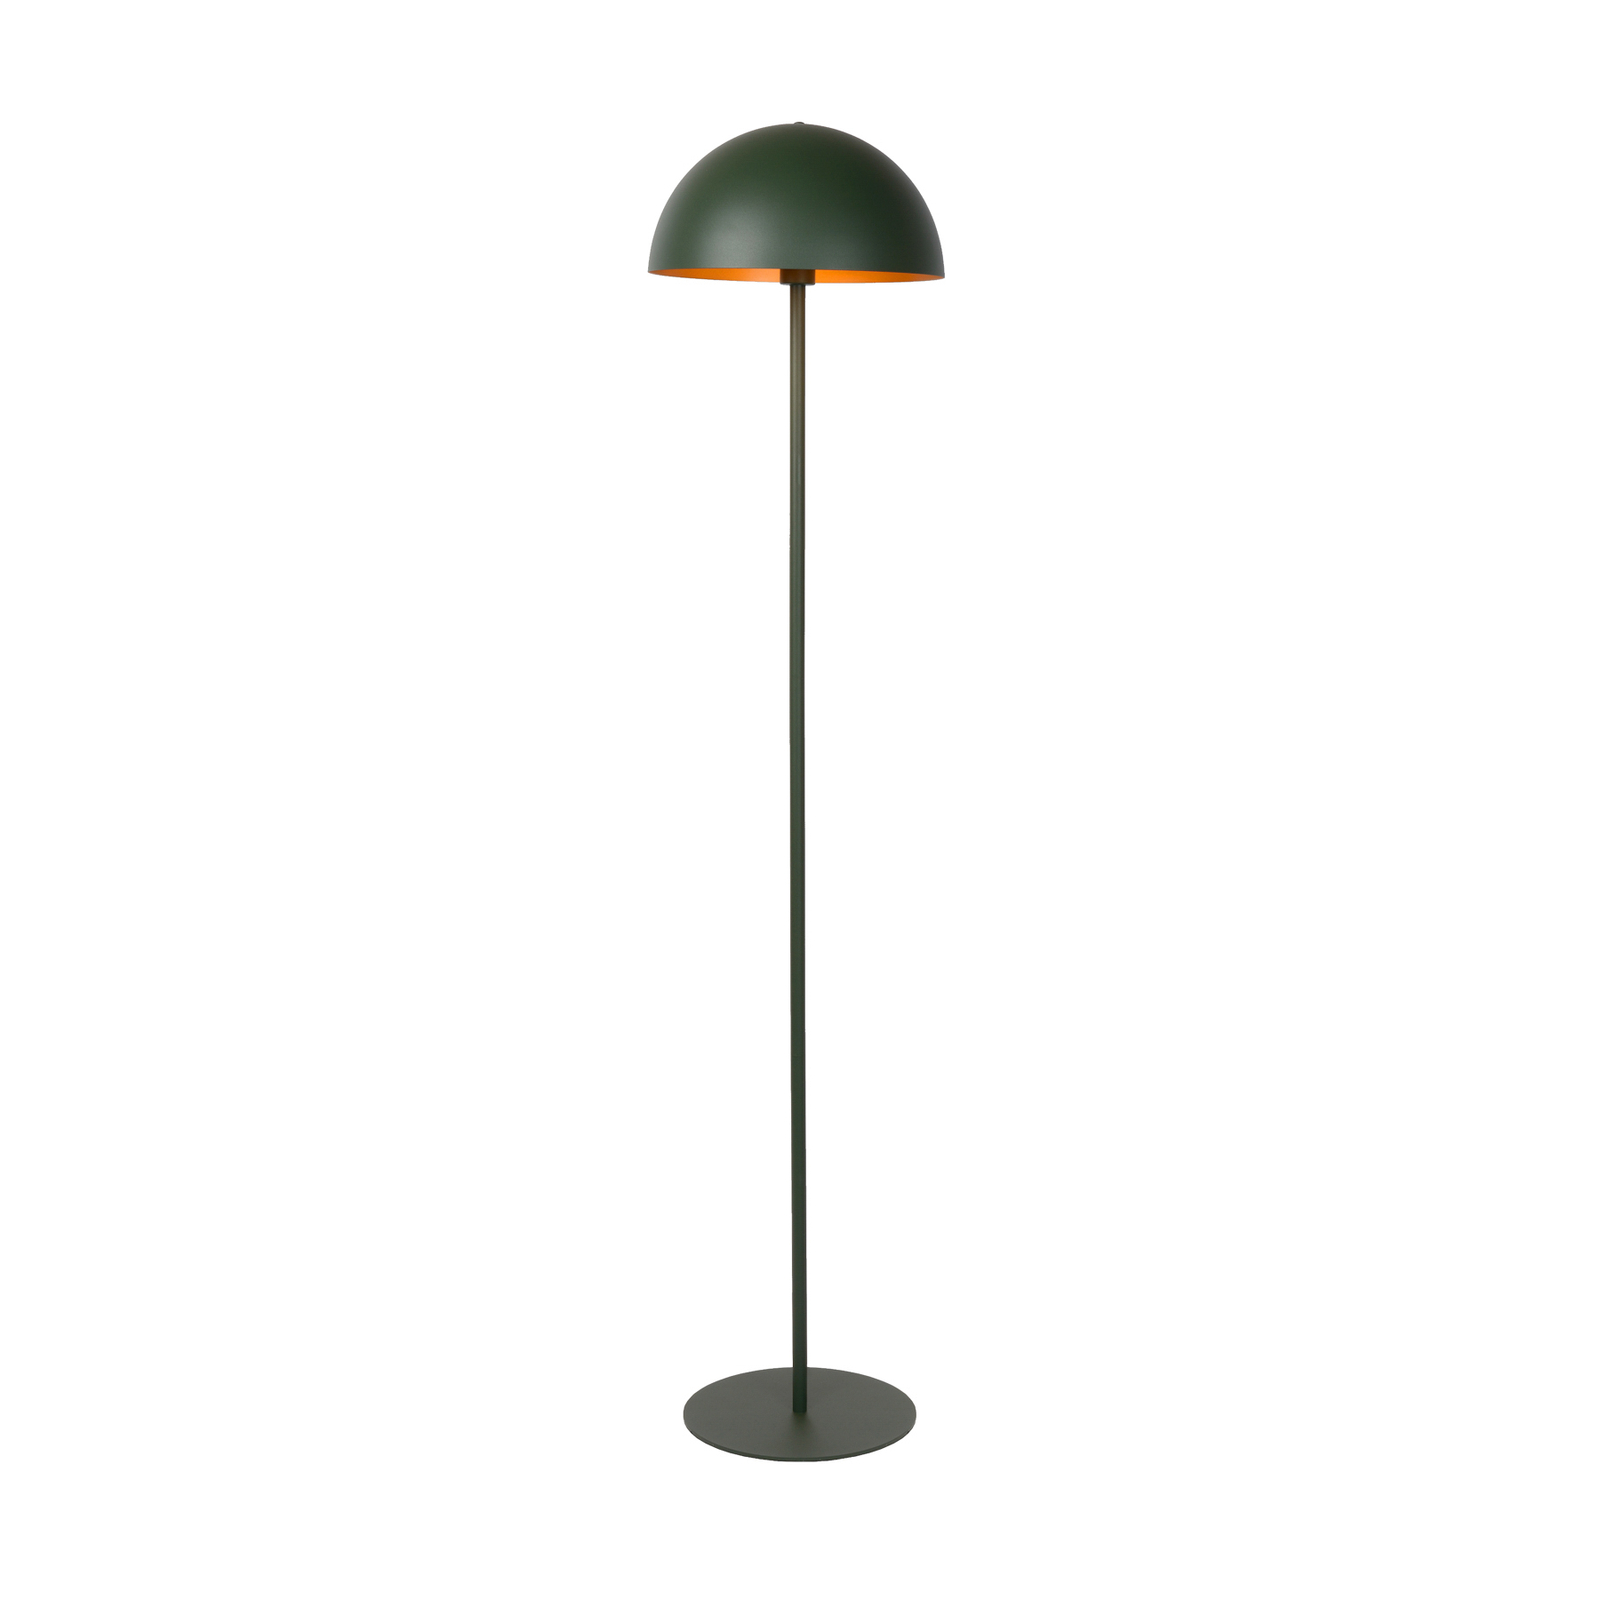 Lampe sur pied Siemon en acier, Ø 35 cm verte